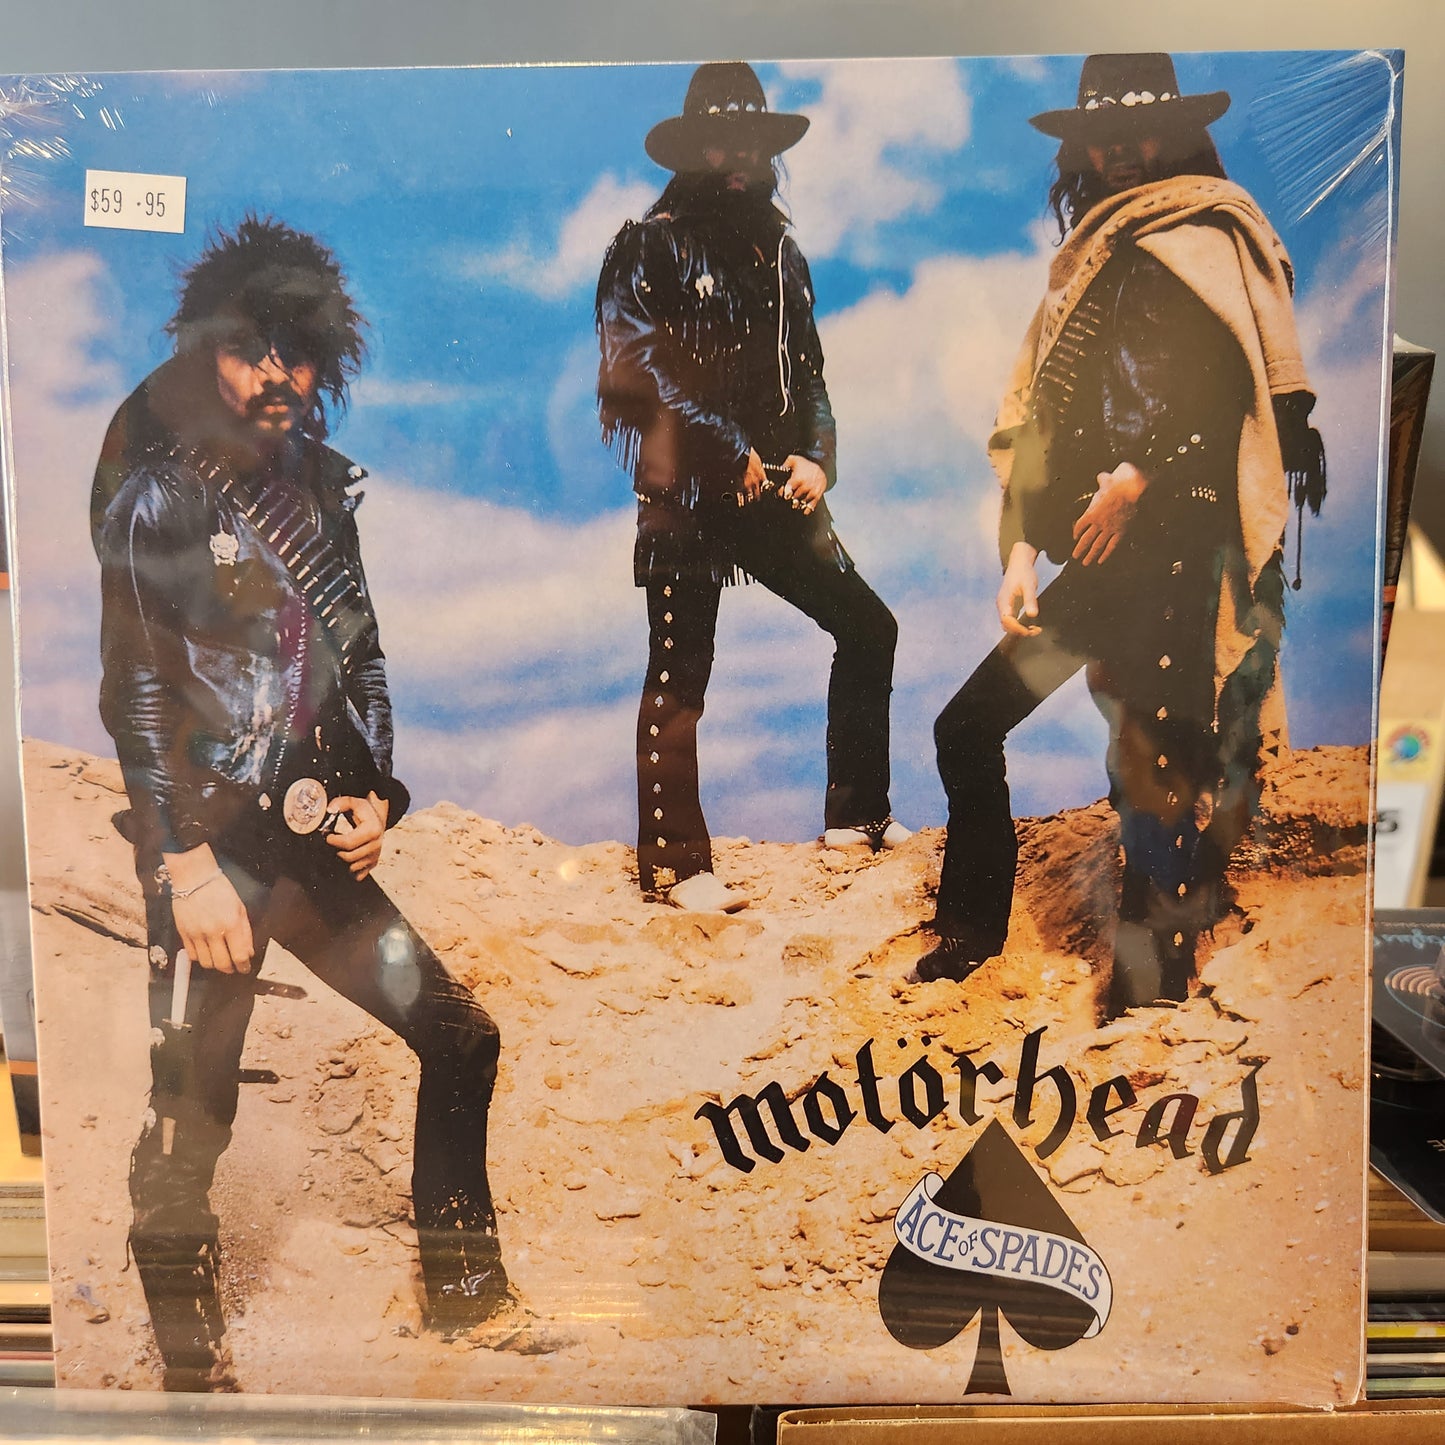 Motorhead - Ace of Spades - Vinyl LP